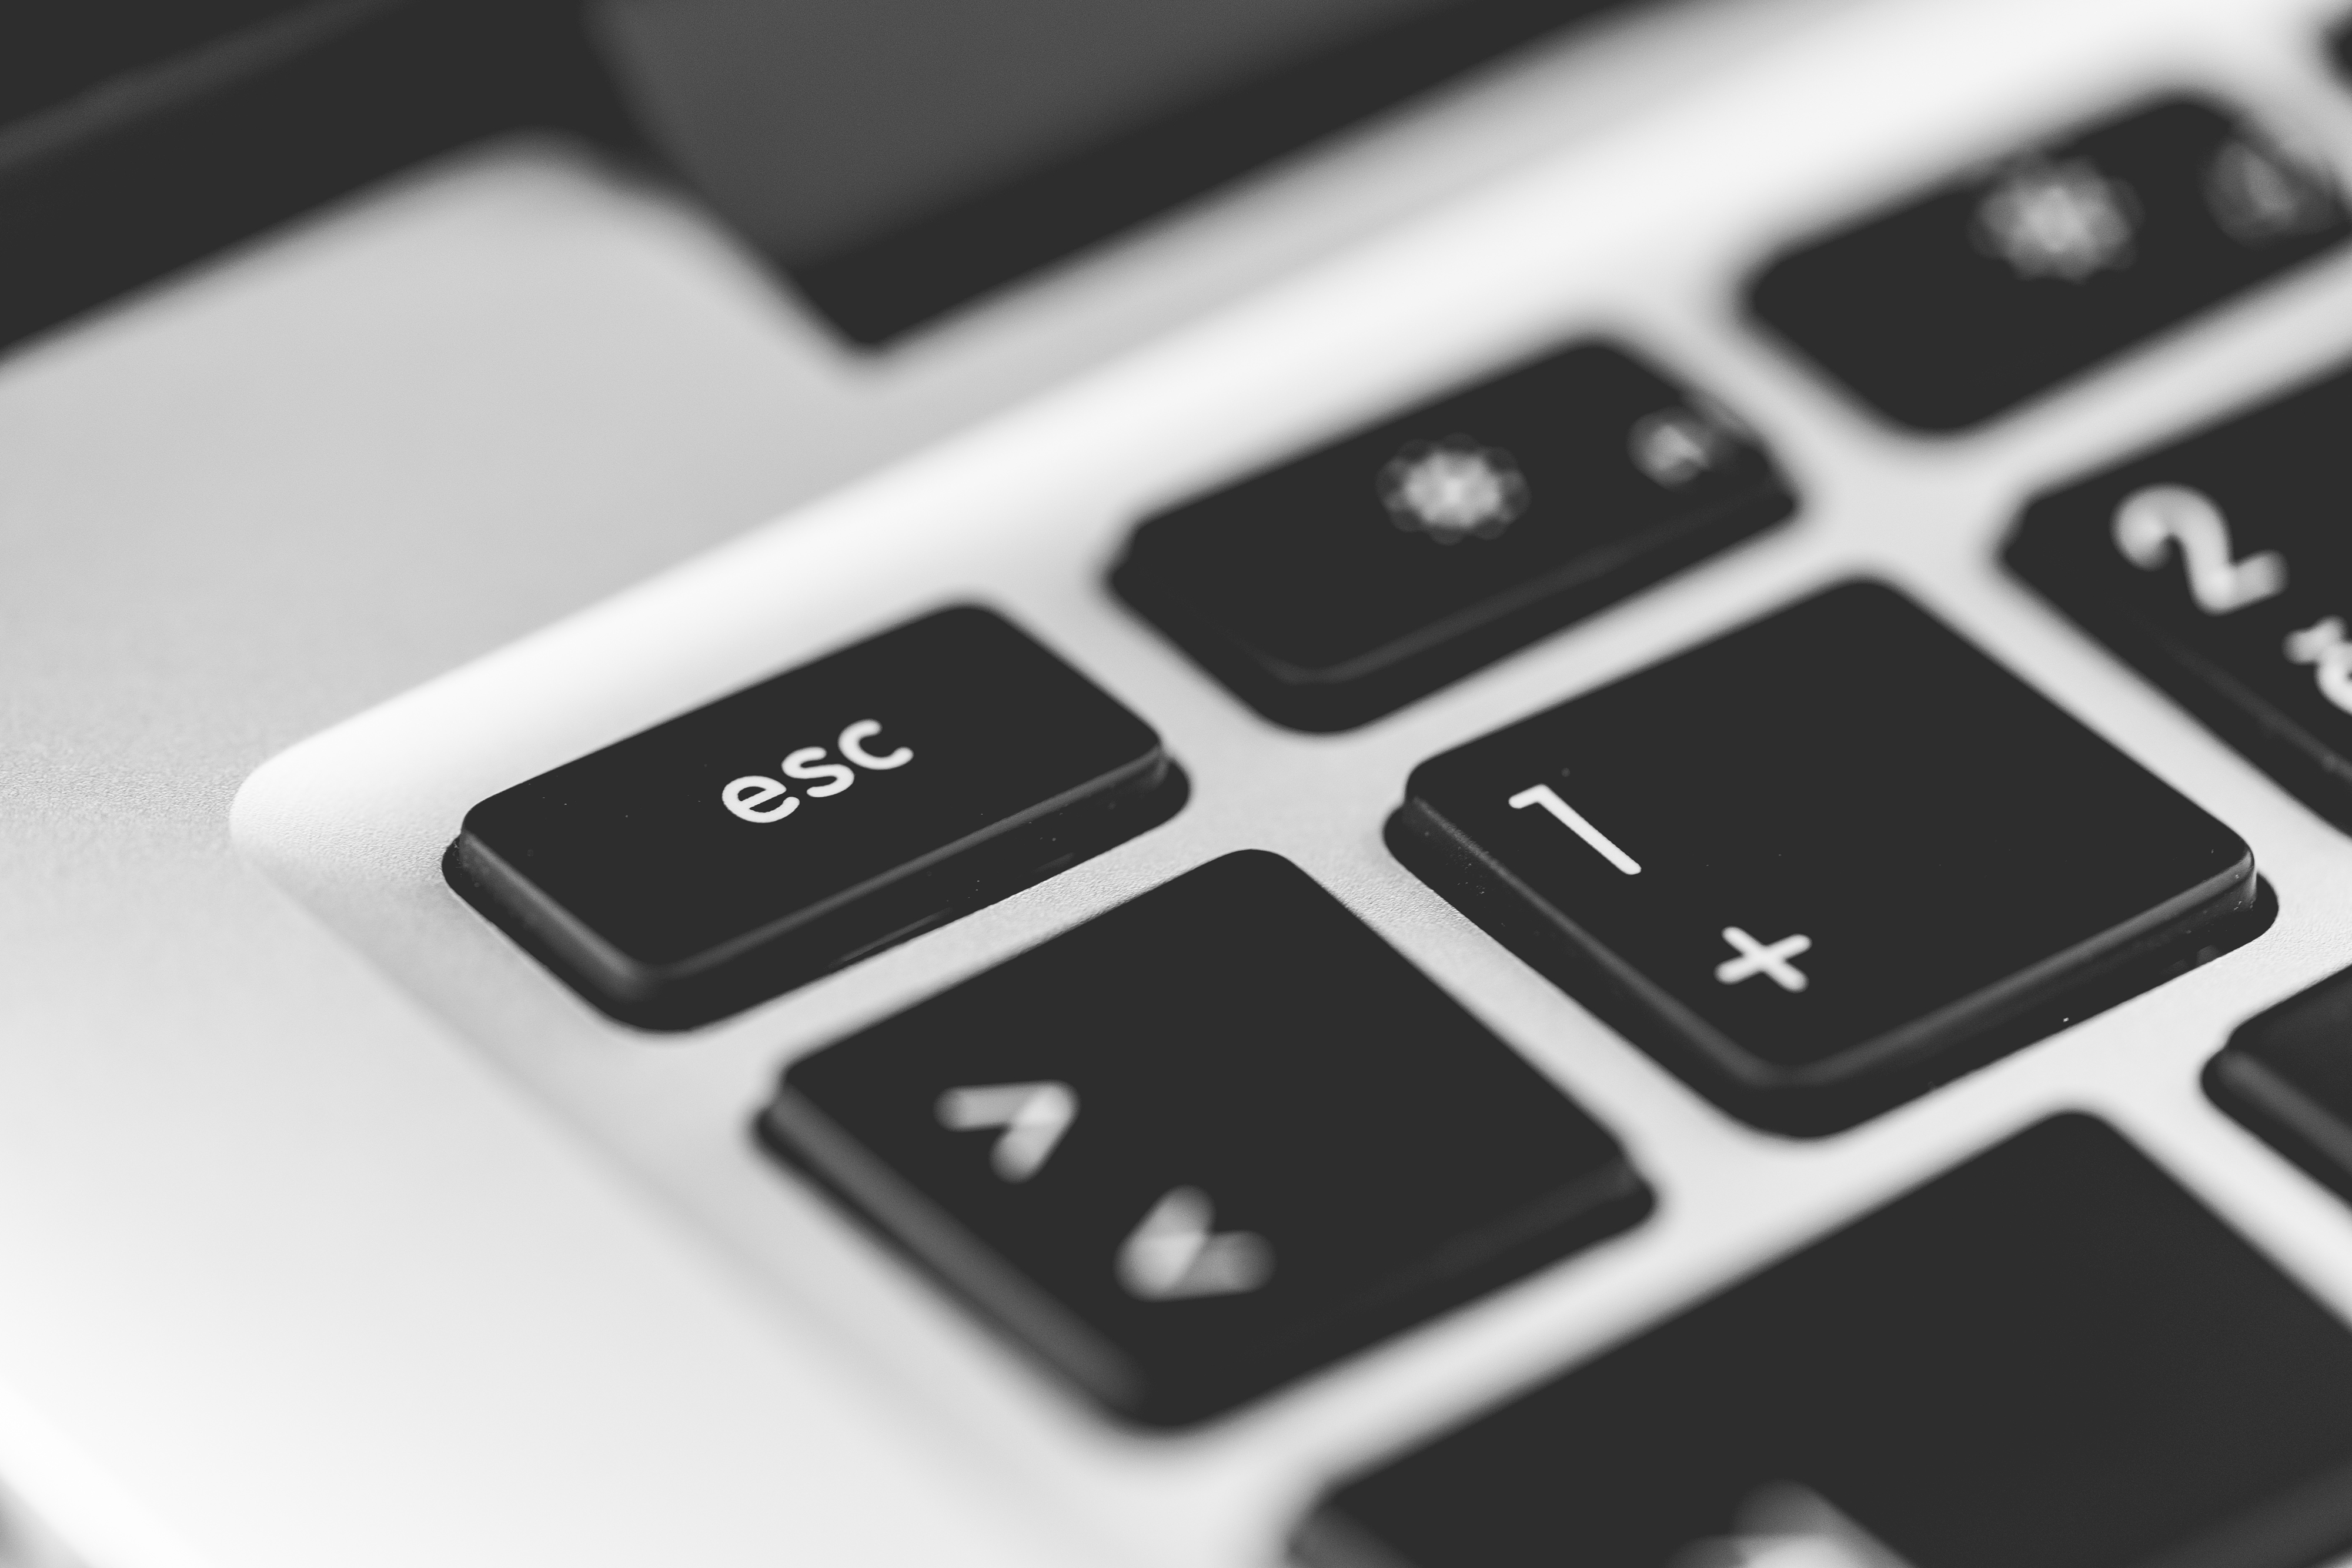 escape-key-laptop-keyboard-close-up-picjumbo-com (4)